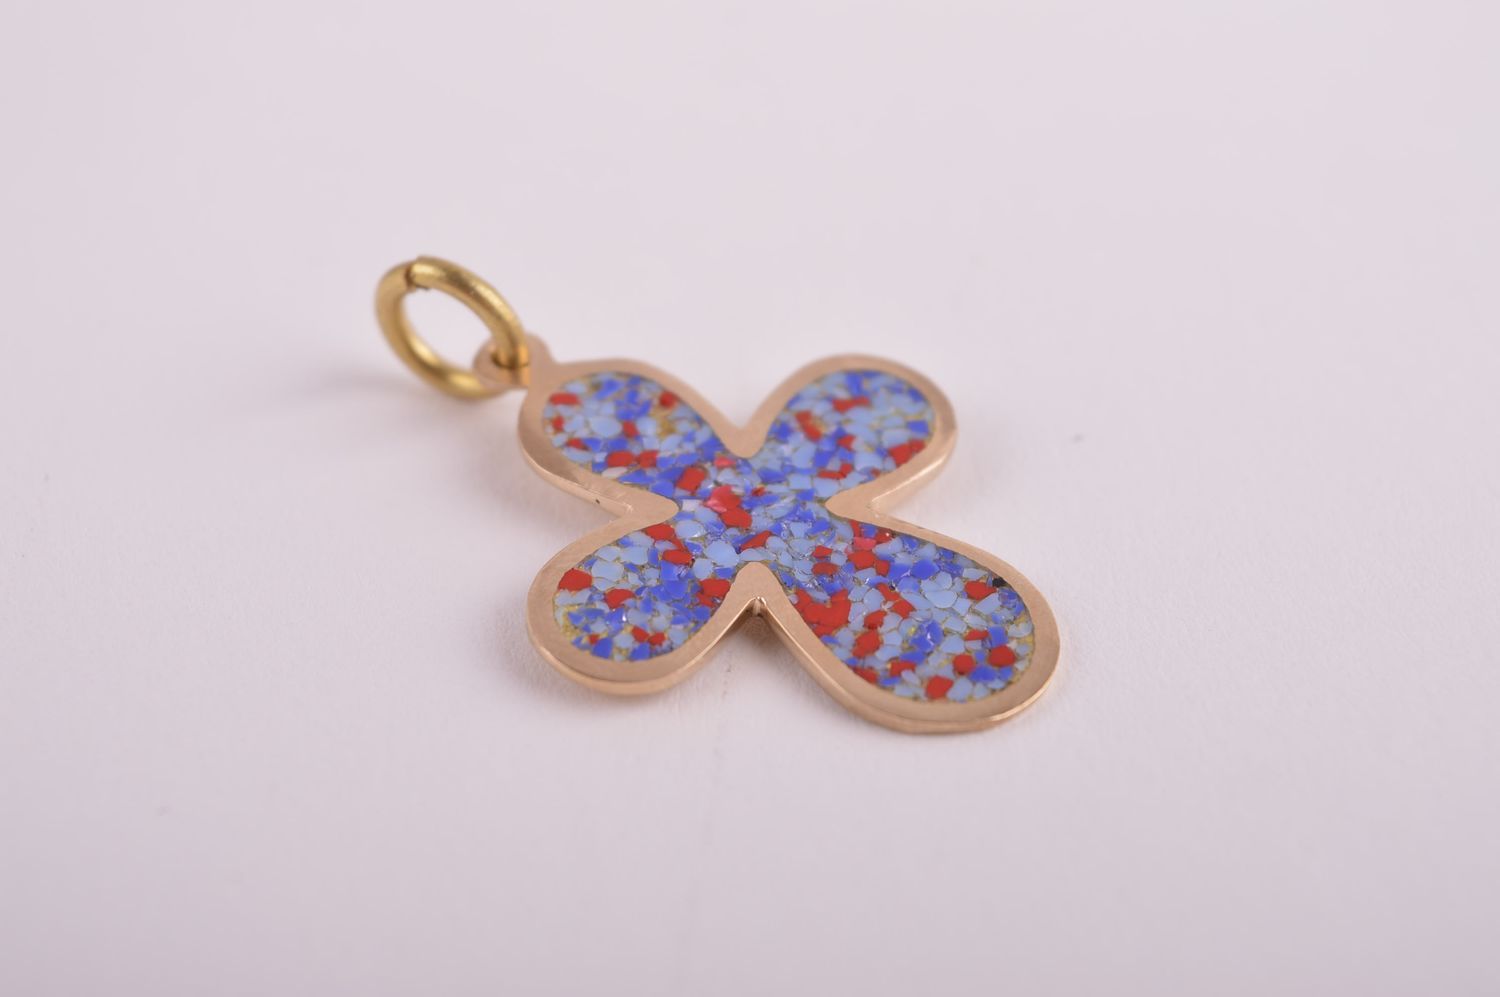 Unusual handmade cross pendant metal craft gemstone pendant jewelry designs photo 4